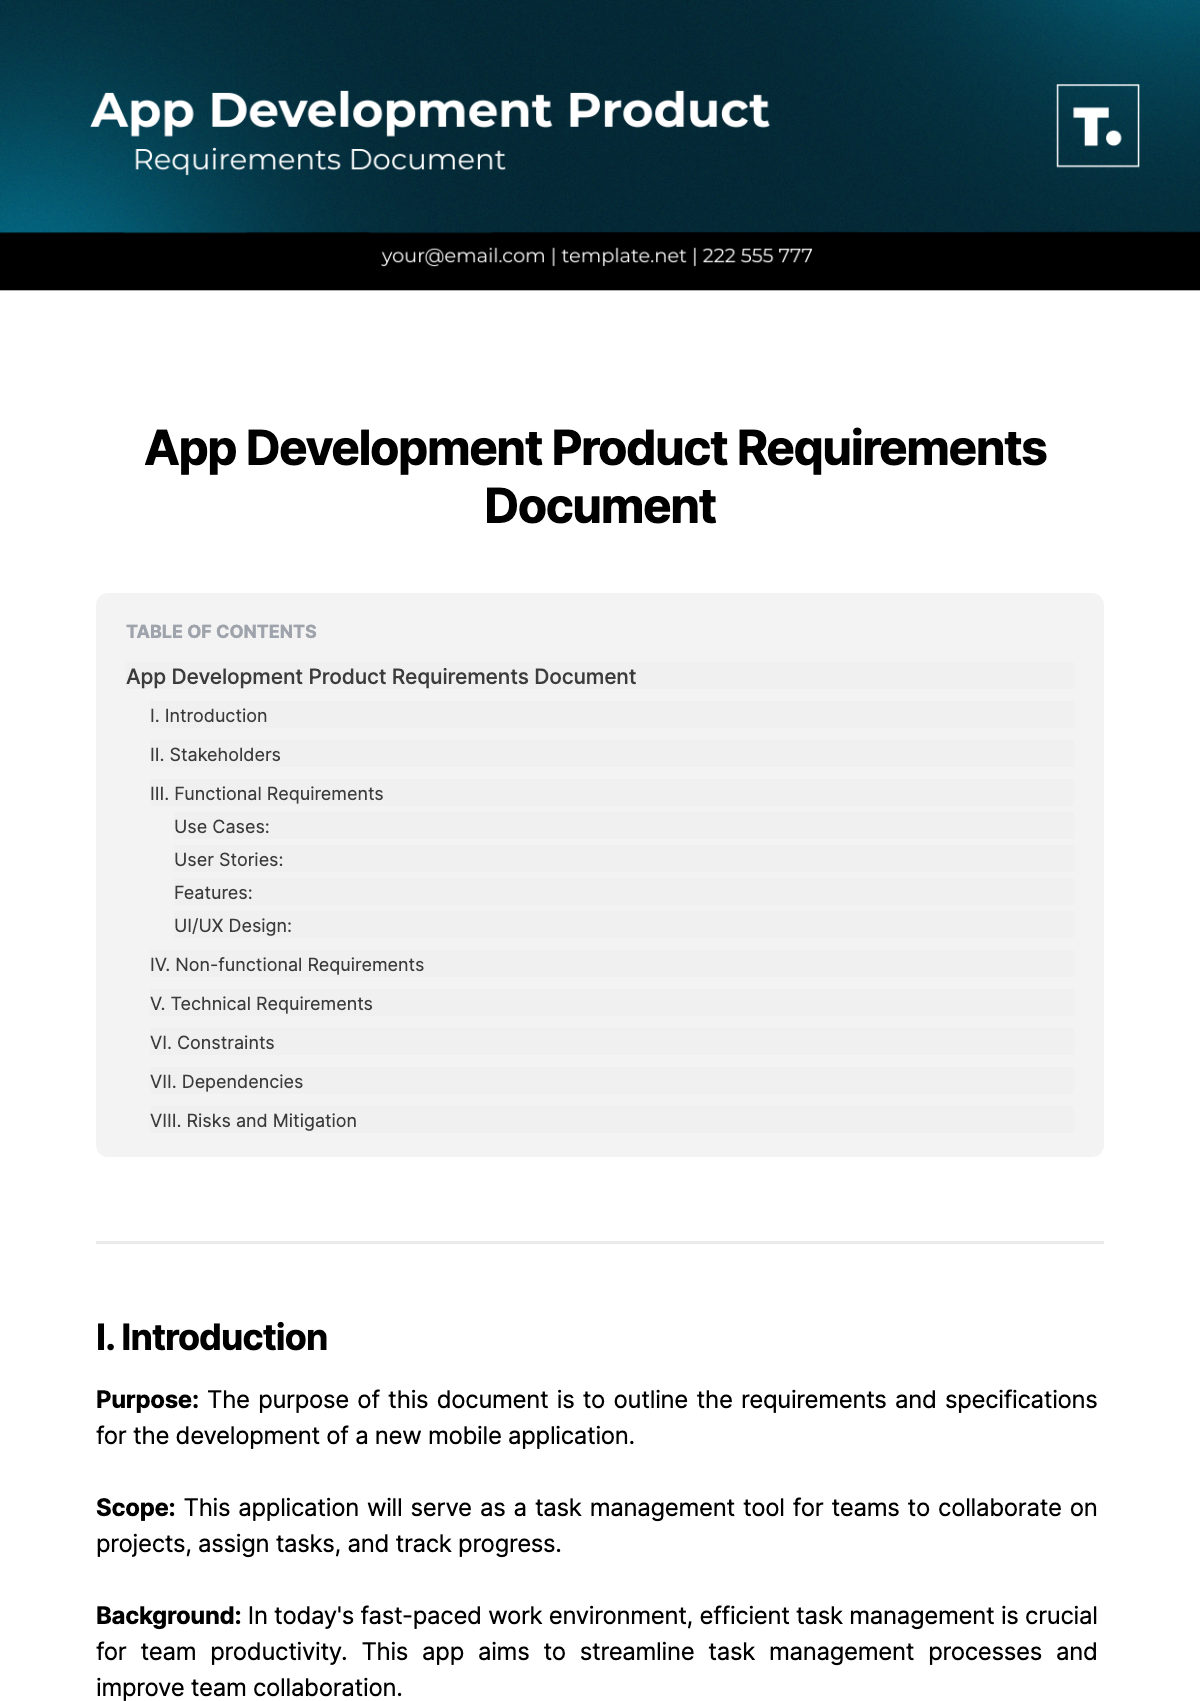 App Development Product Requirements Document Template